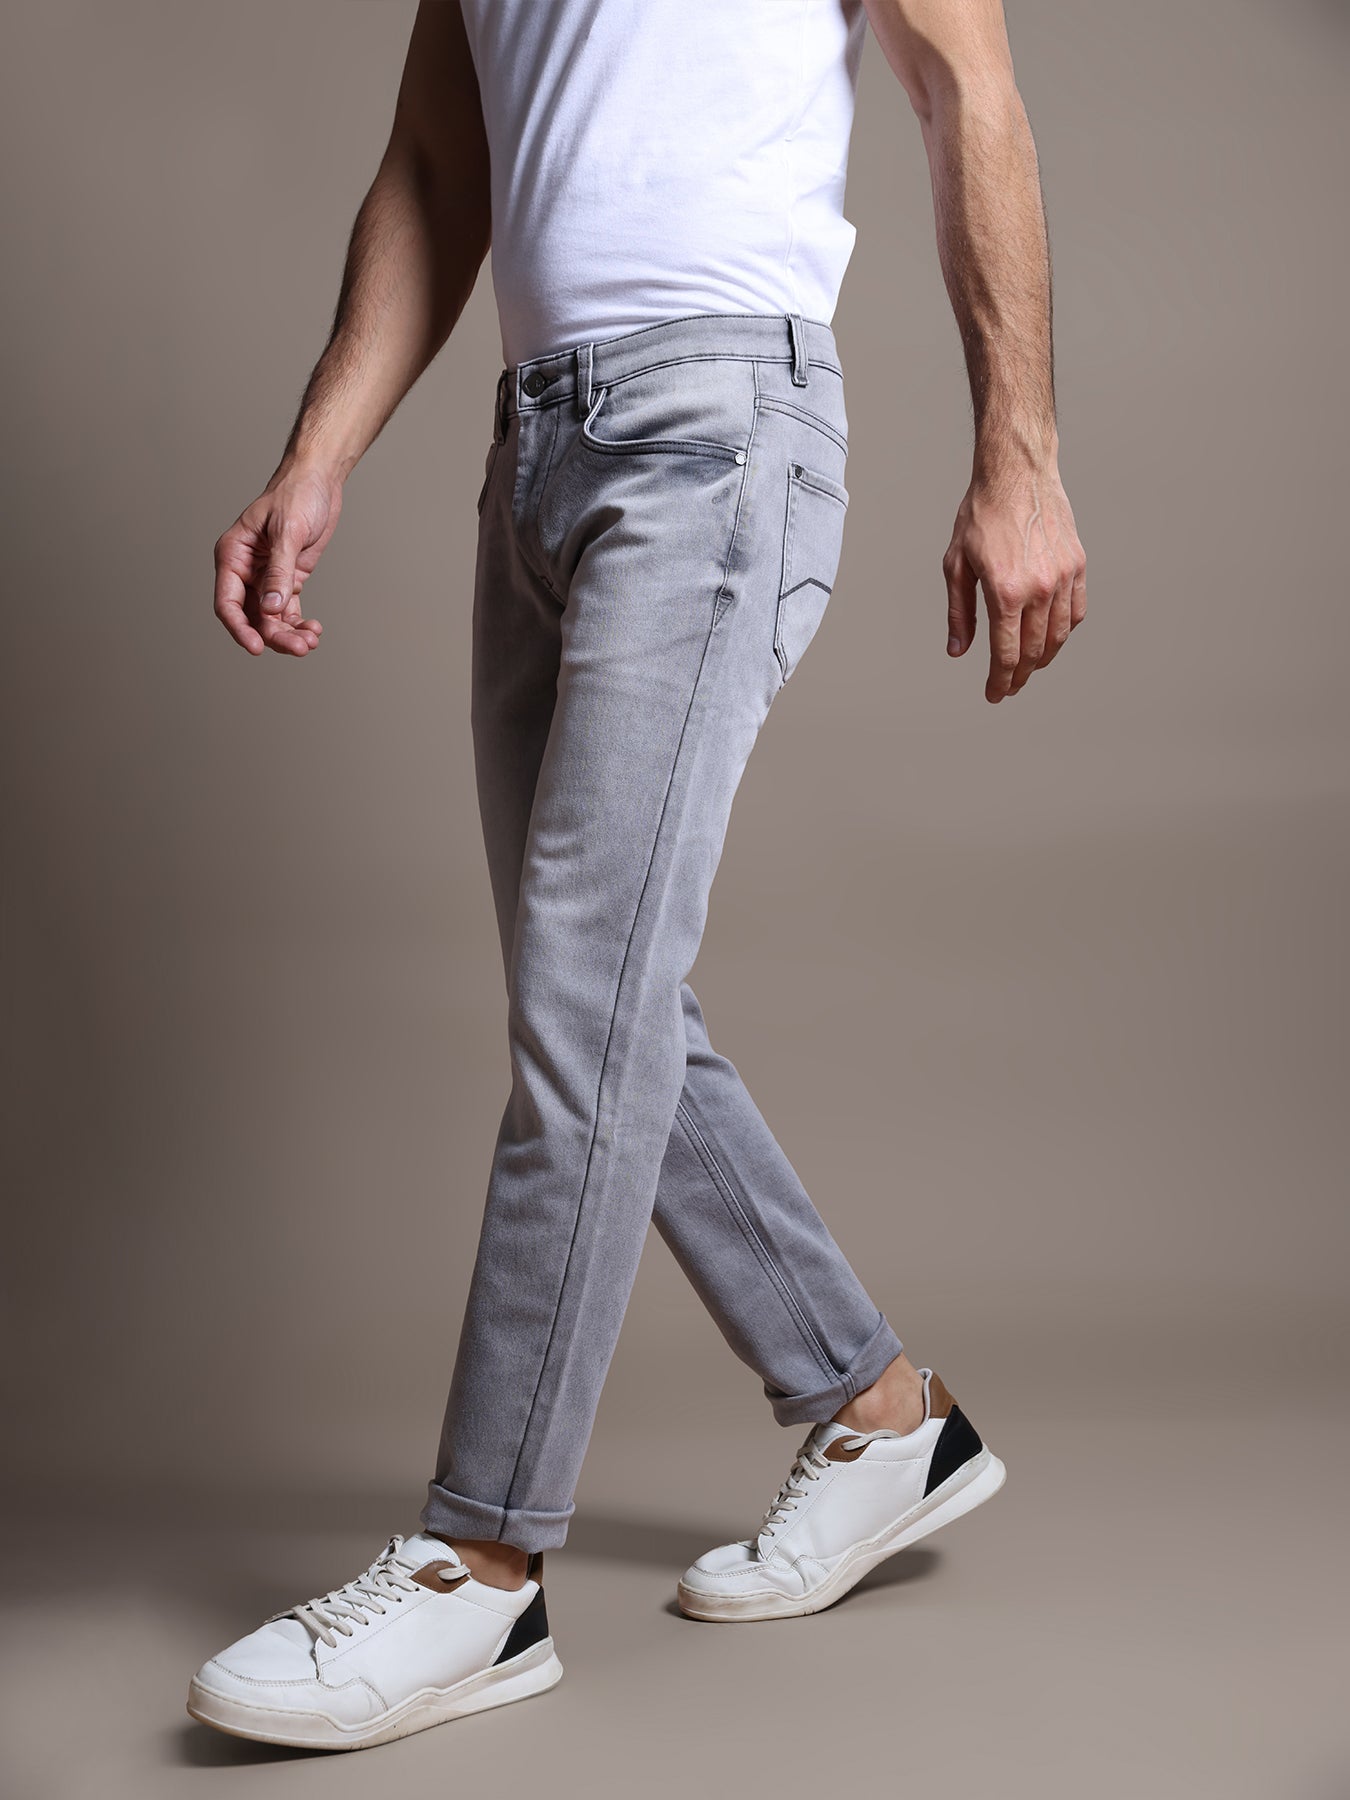 Cotton Stretch Grey Melange Plain Narrow Fit Flat Front Casual Jeans